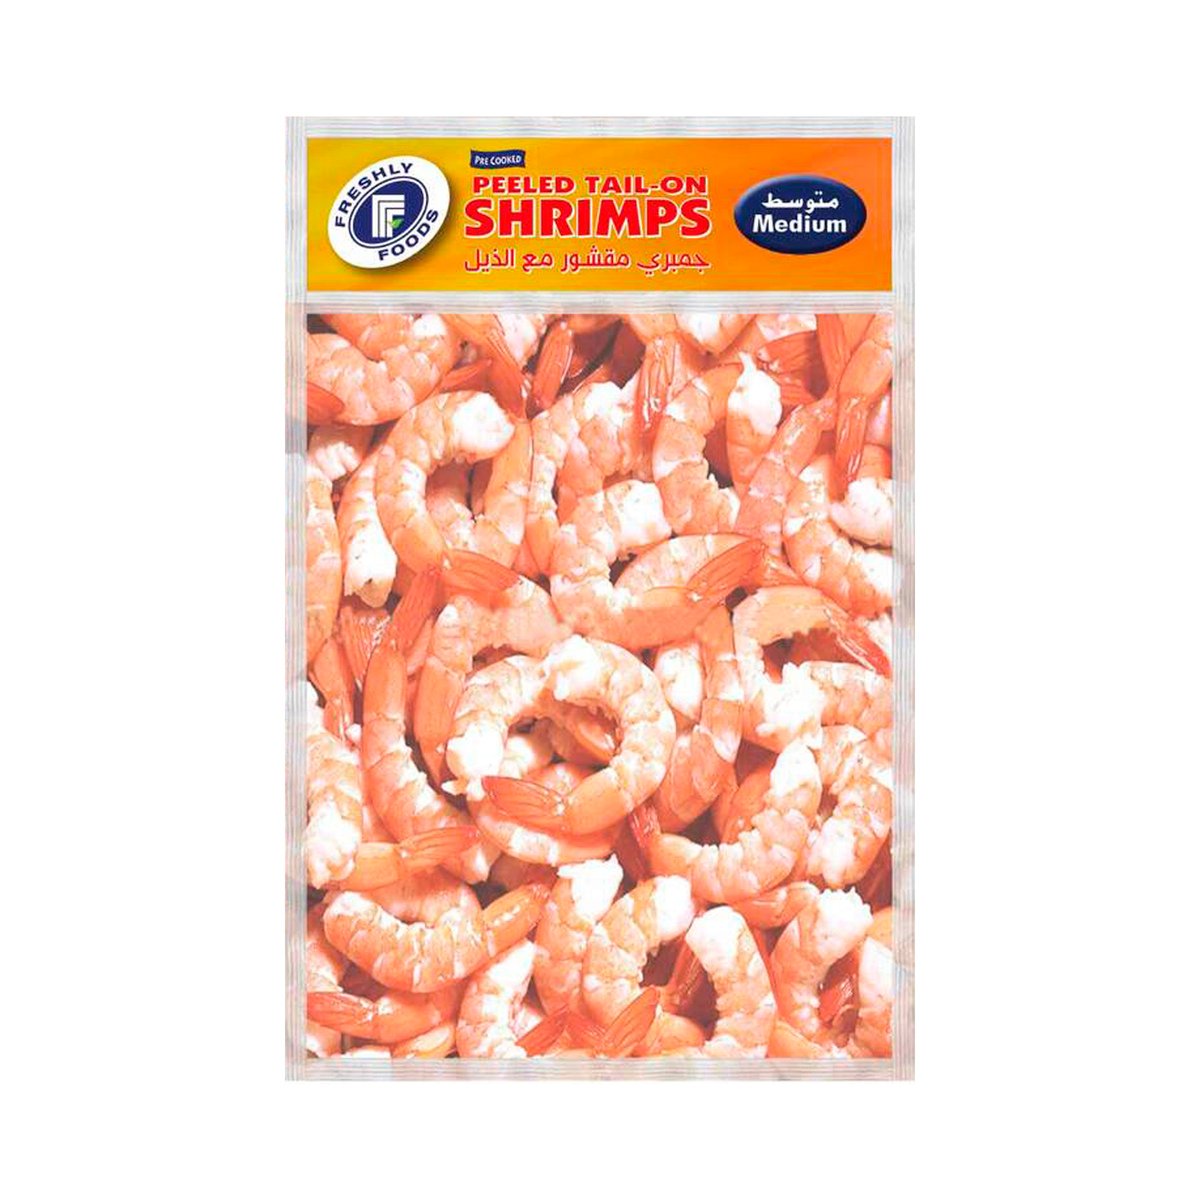 Freshly Food Pre Cooked Peeled Tail On Shrimps Medium 400g